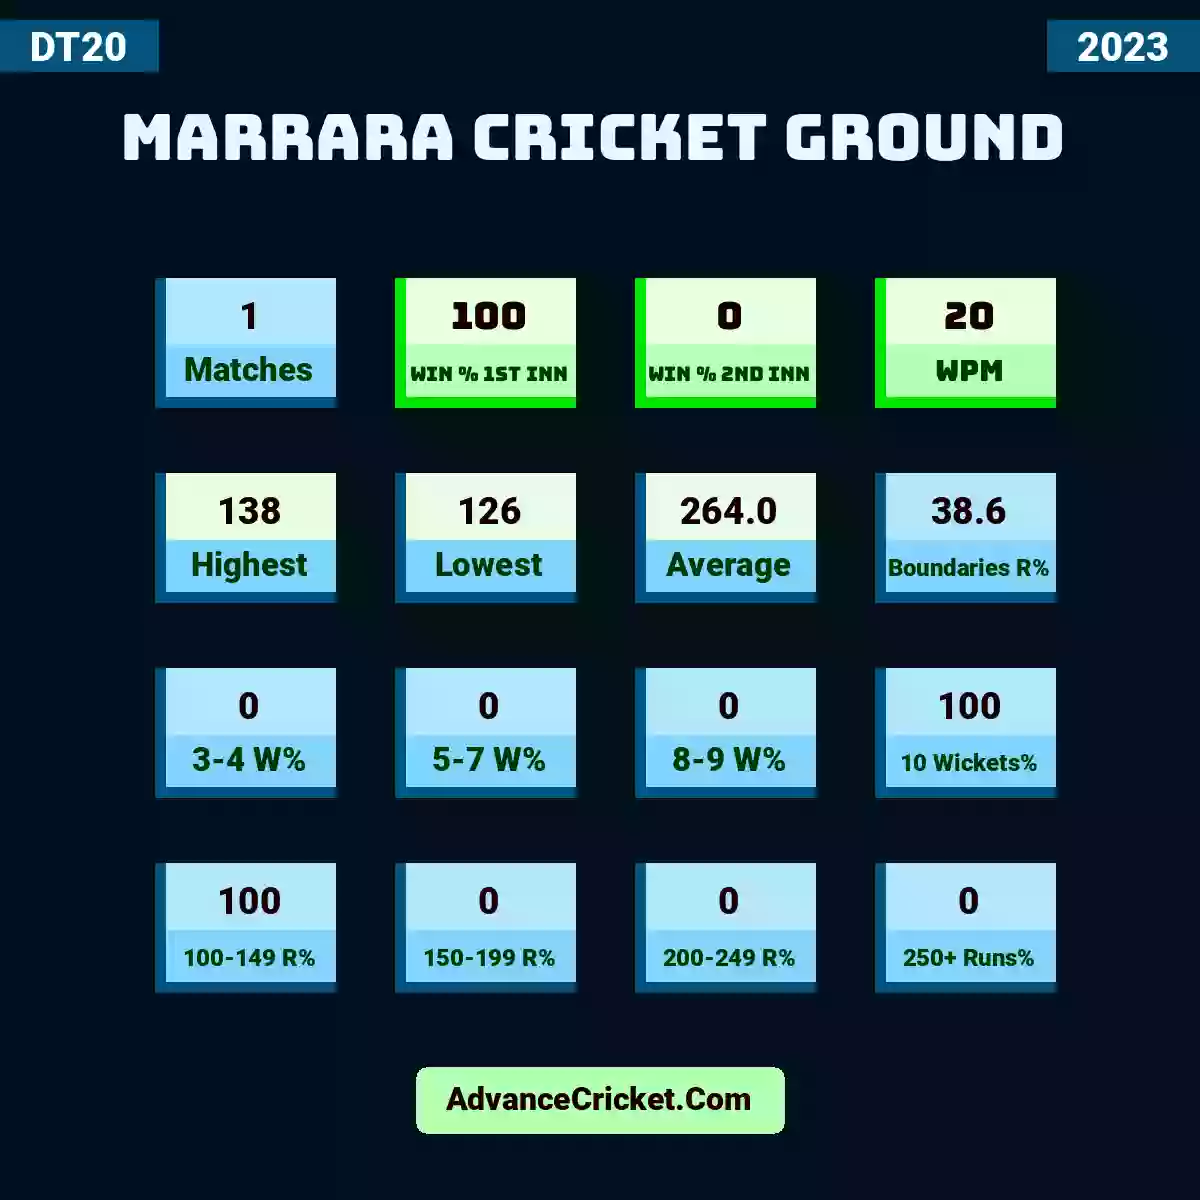 Image showing Marrara Cricket Ground  with Matches: 1, Win % 1st Inn: 100, Win % 2nd Inn: 0, WPM: 20, Highest: 138, Lowest: 126, Average: 264.0, Boundaries R%: 38.6, 3-4 W%: 0, 5-7 W%: 0, 8-9 W%: 0, 10 Wickets%: 100, 100-149 R%: 100, 150-199 R%: 0, 200-249 R%: 0, 250+ Runs%: 0.